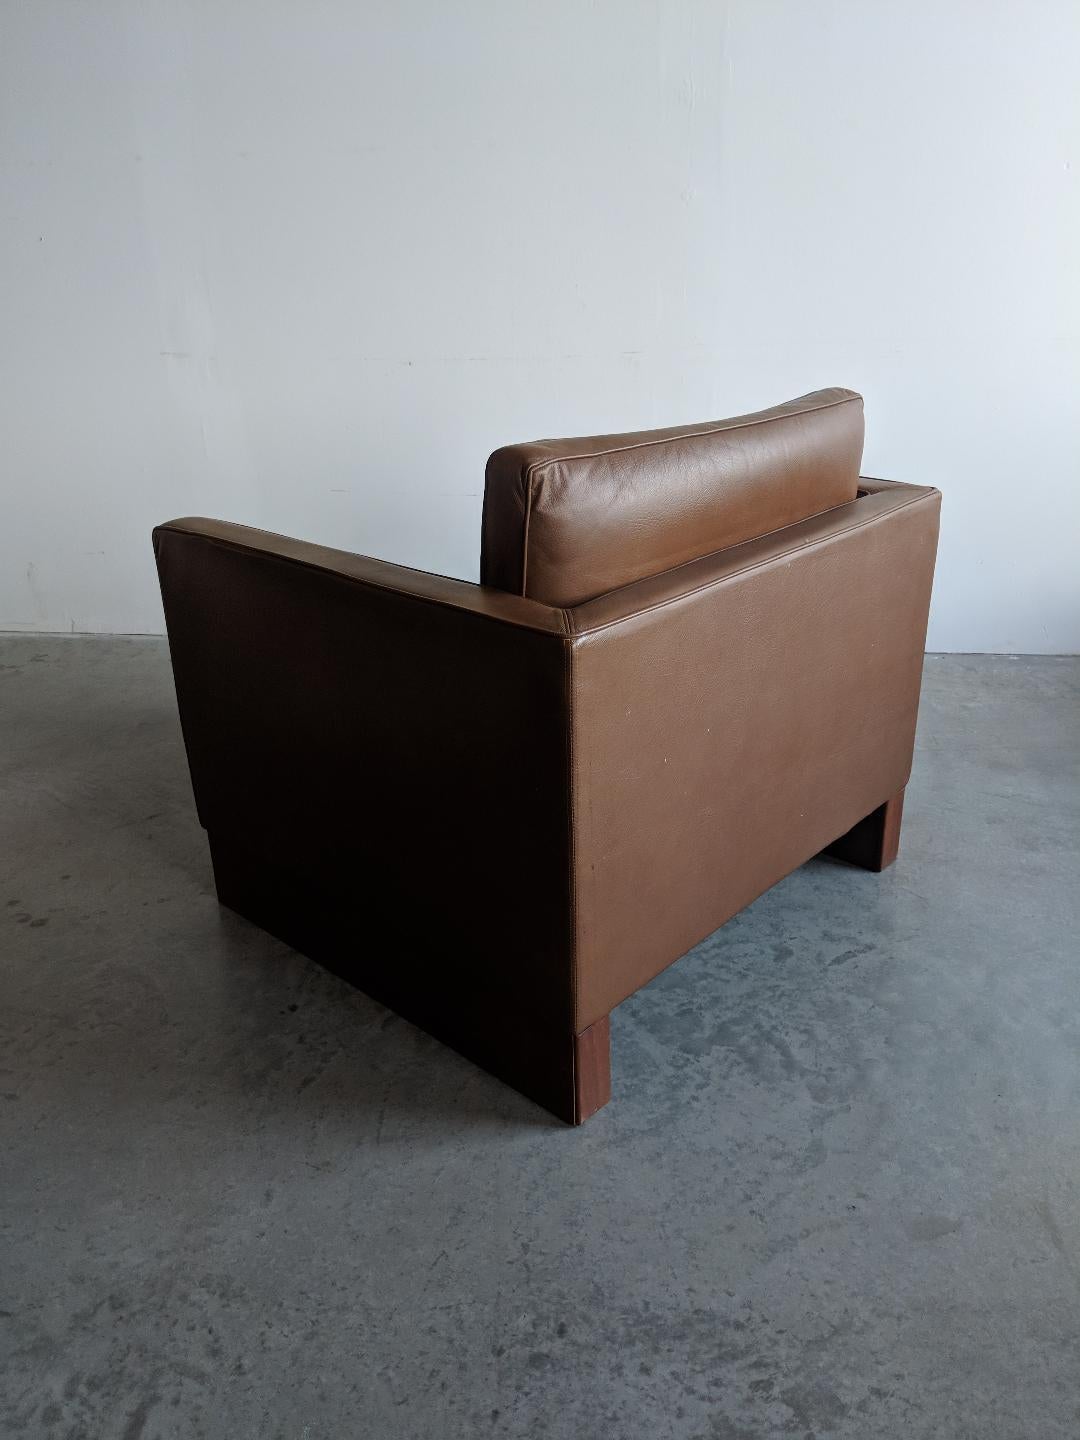 American Mies van der Rohe Designed Lounge Chair, circa 1968